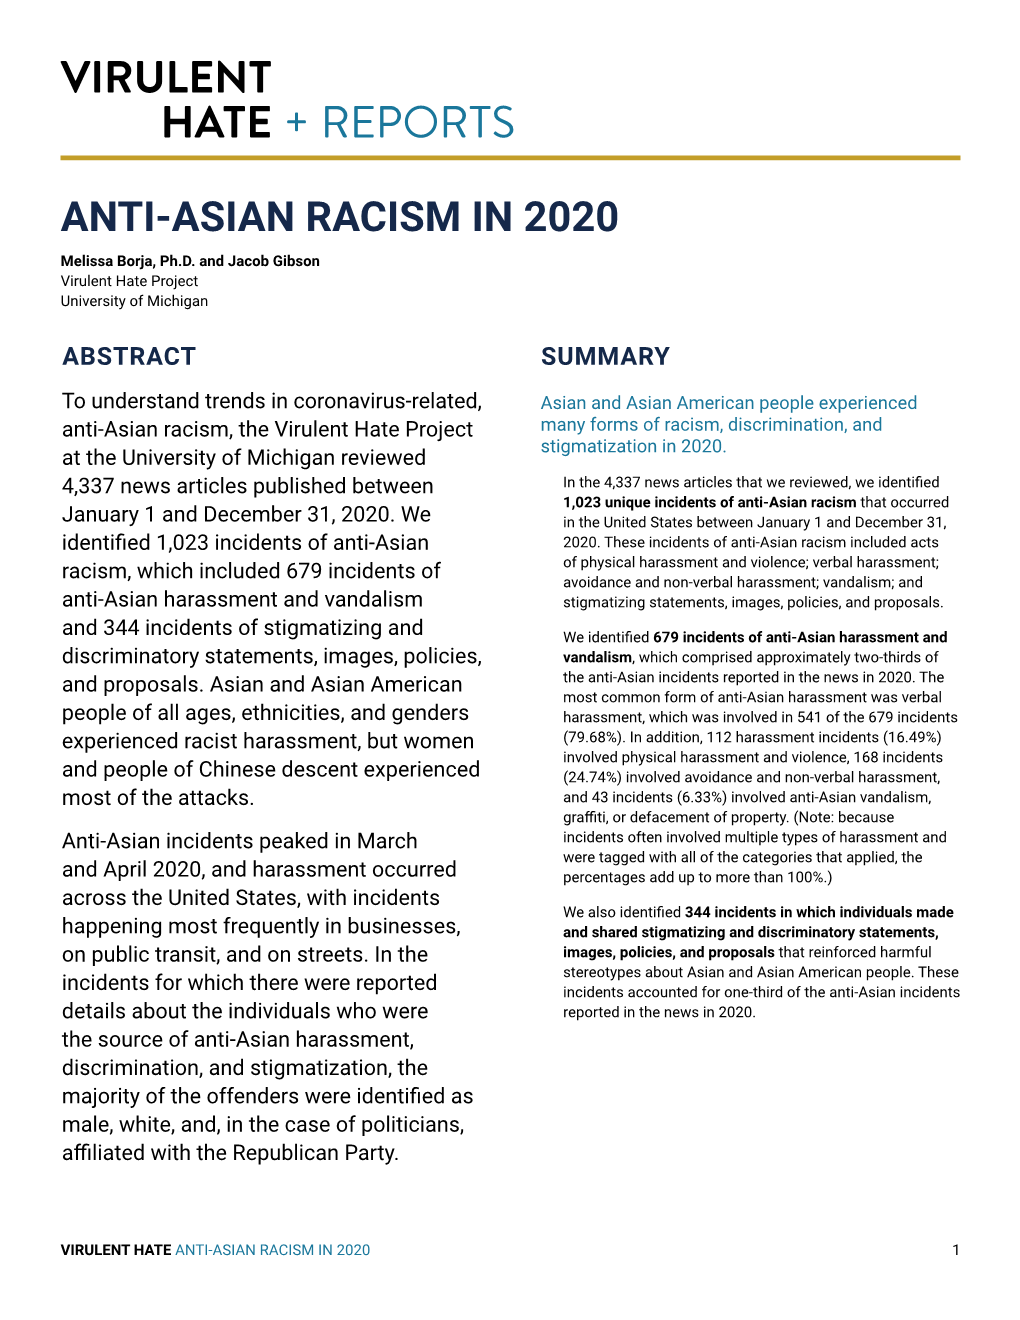 ANTI-ASIAN RACISM in 2020 Melissa Borja, Ph.D